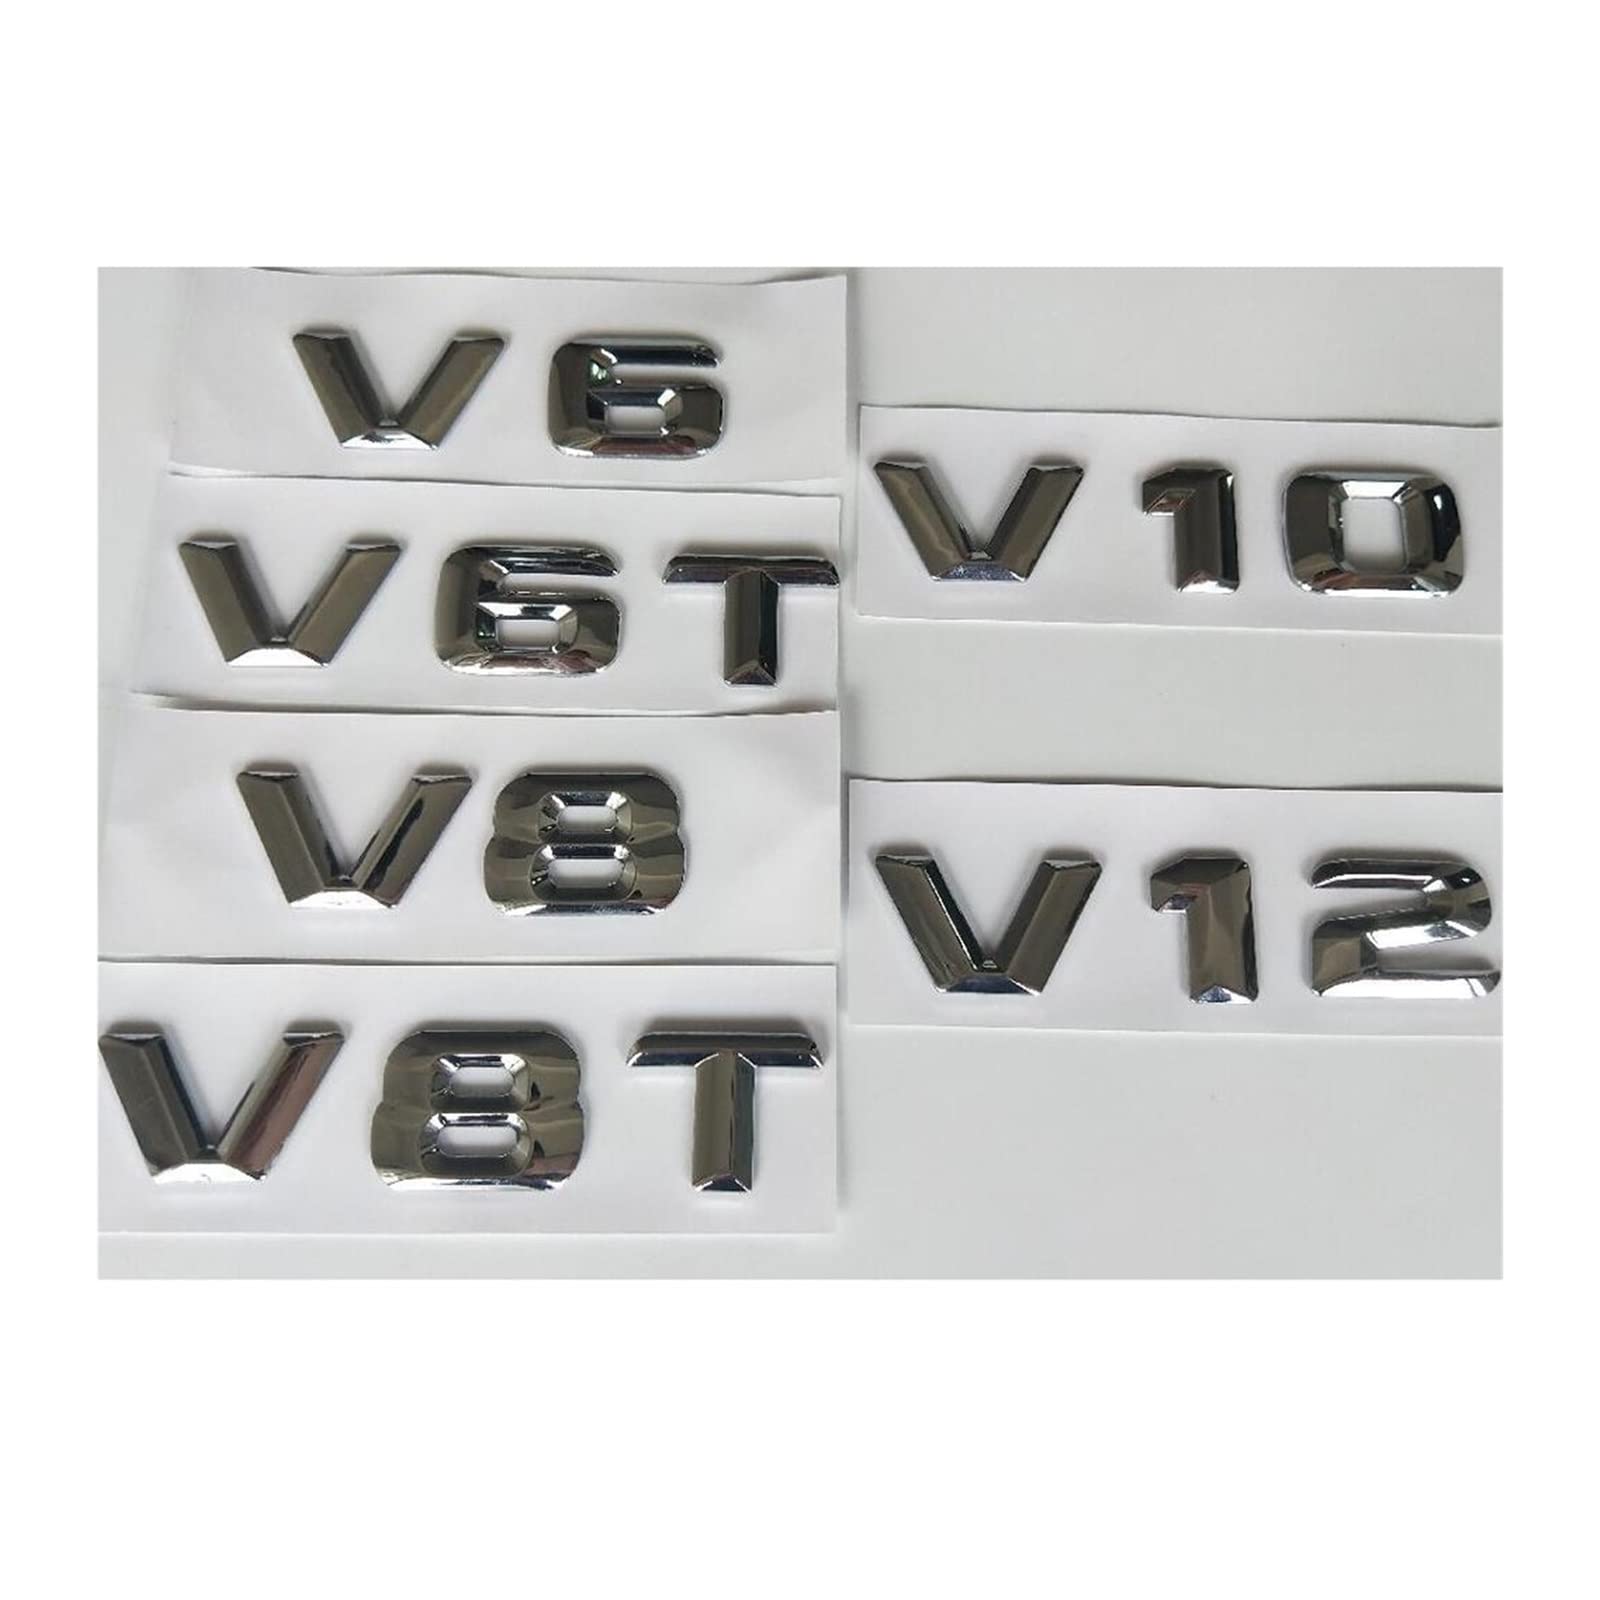 LHYFAGQK Chrom 3D-Buchstaben Trunk Displacement Badges Embleme V 6 V 8 V 10 V 12 V 6T V 8T Passend for Mercedes Benz Abzeichen Autoaufkleber(V 8T) von LHYFAGQK